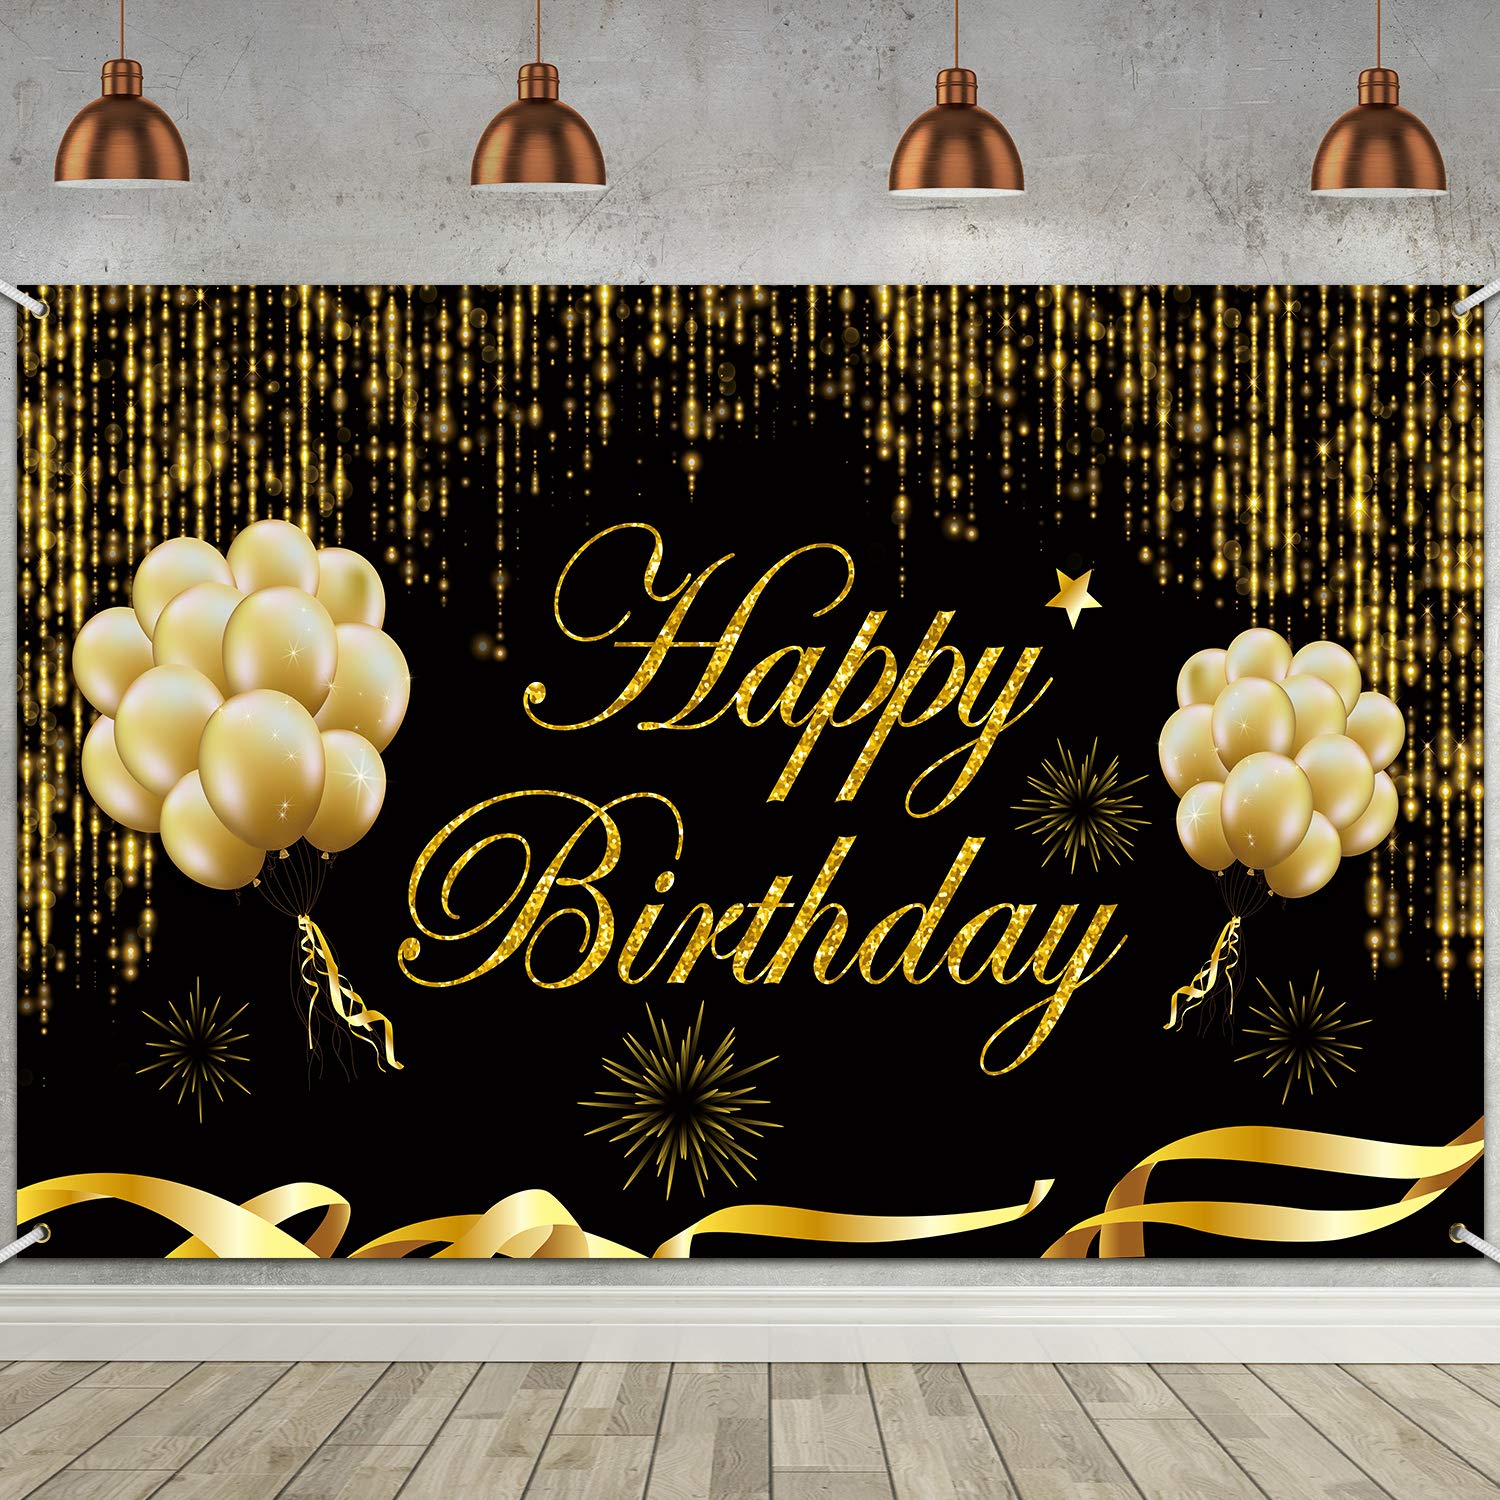 Unique Black background birthday decoration ideas for your next birthday celebration